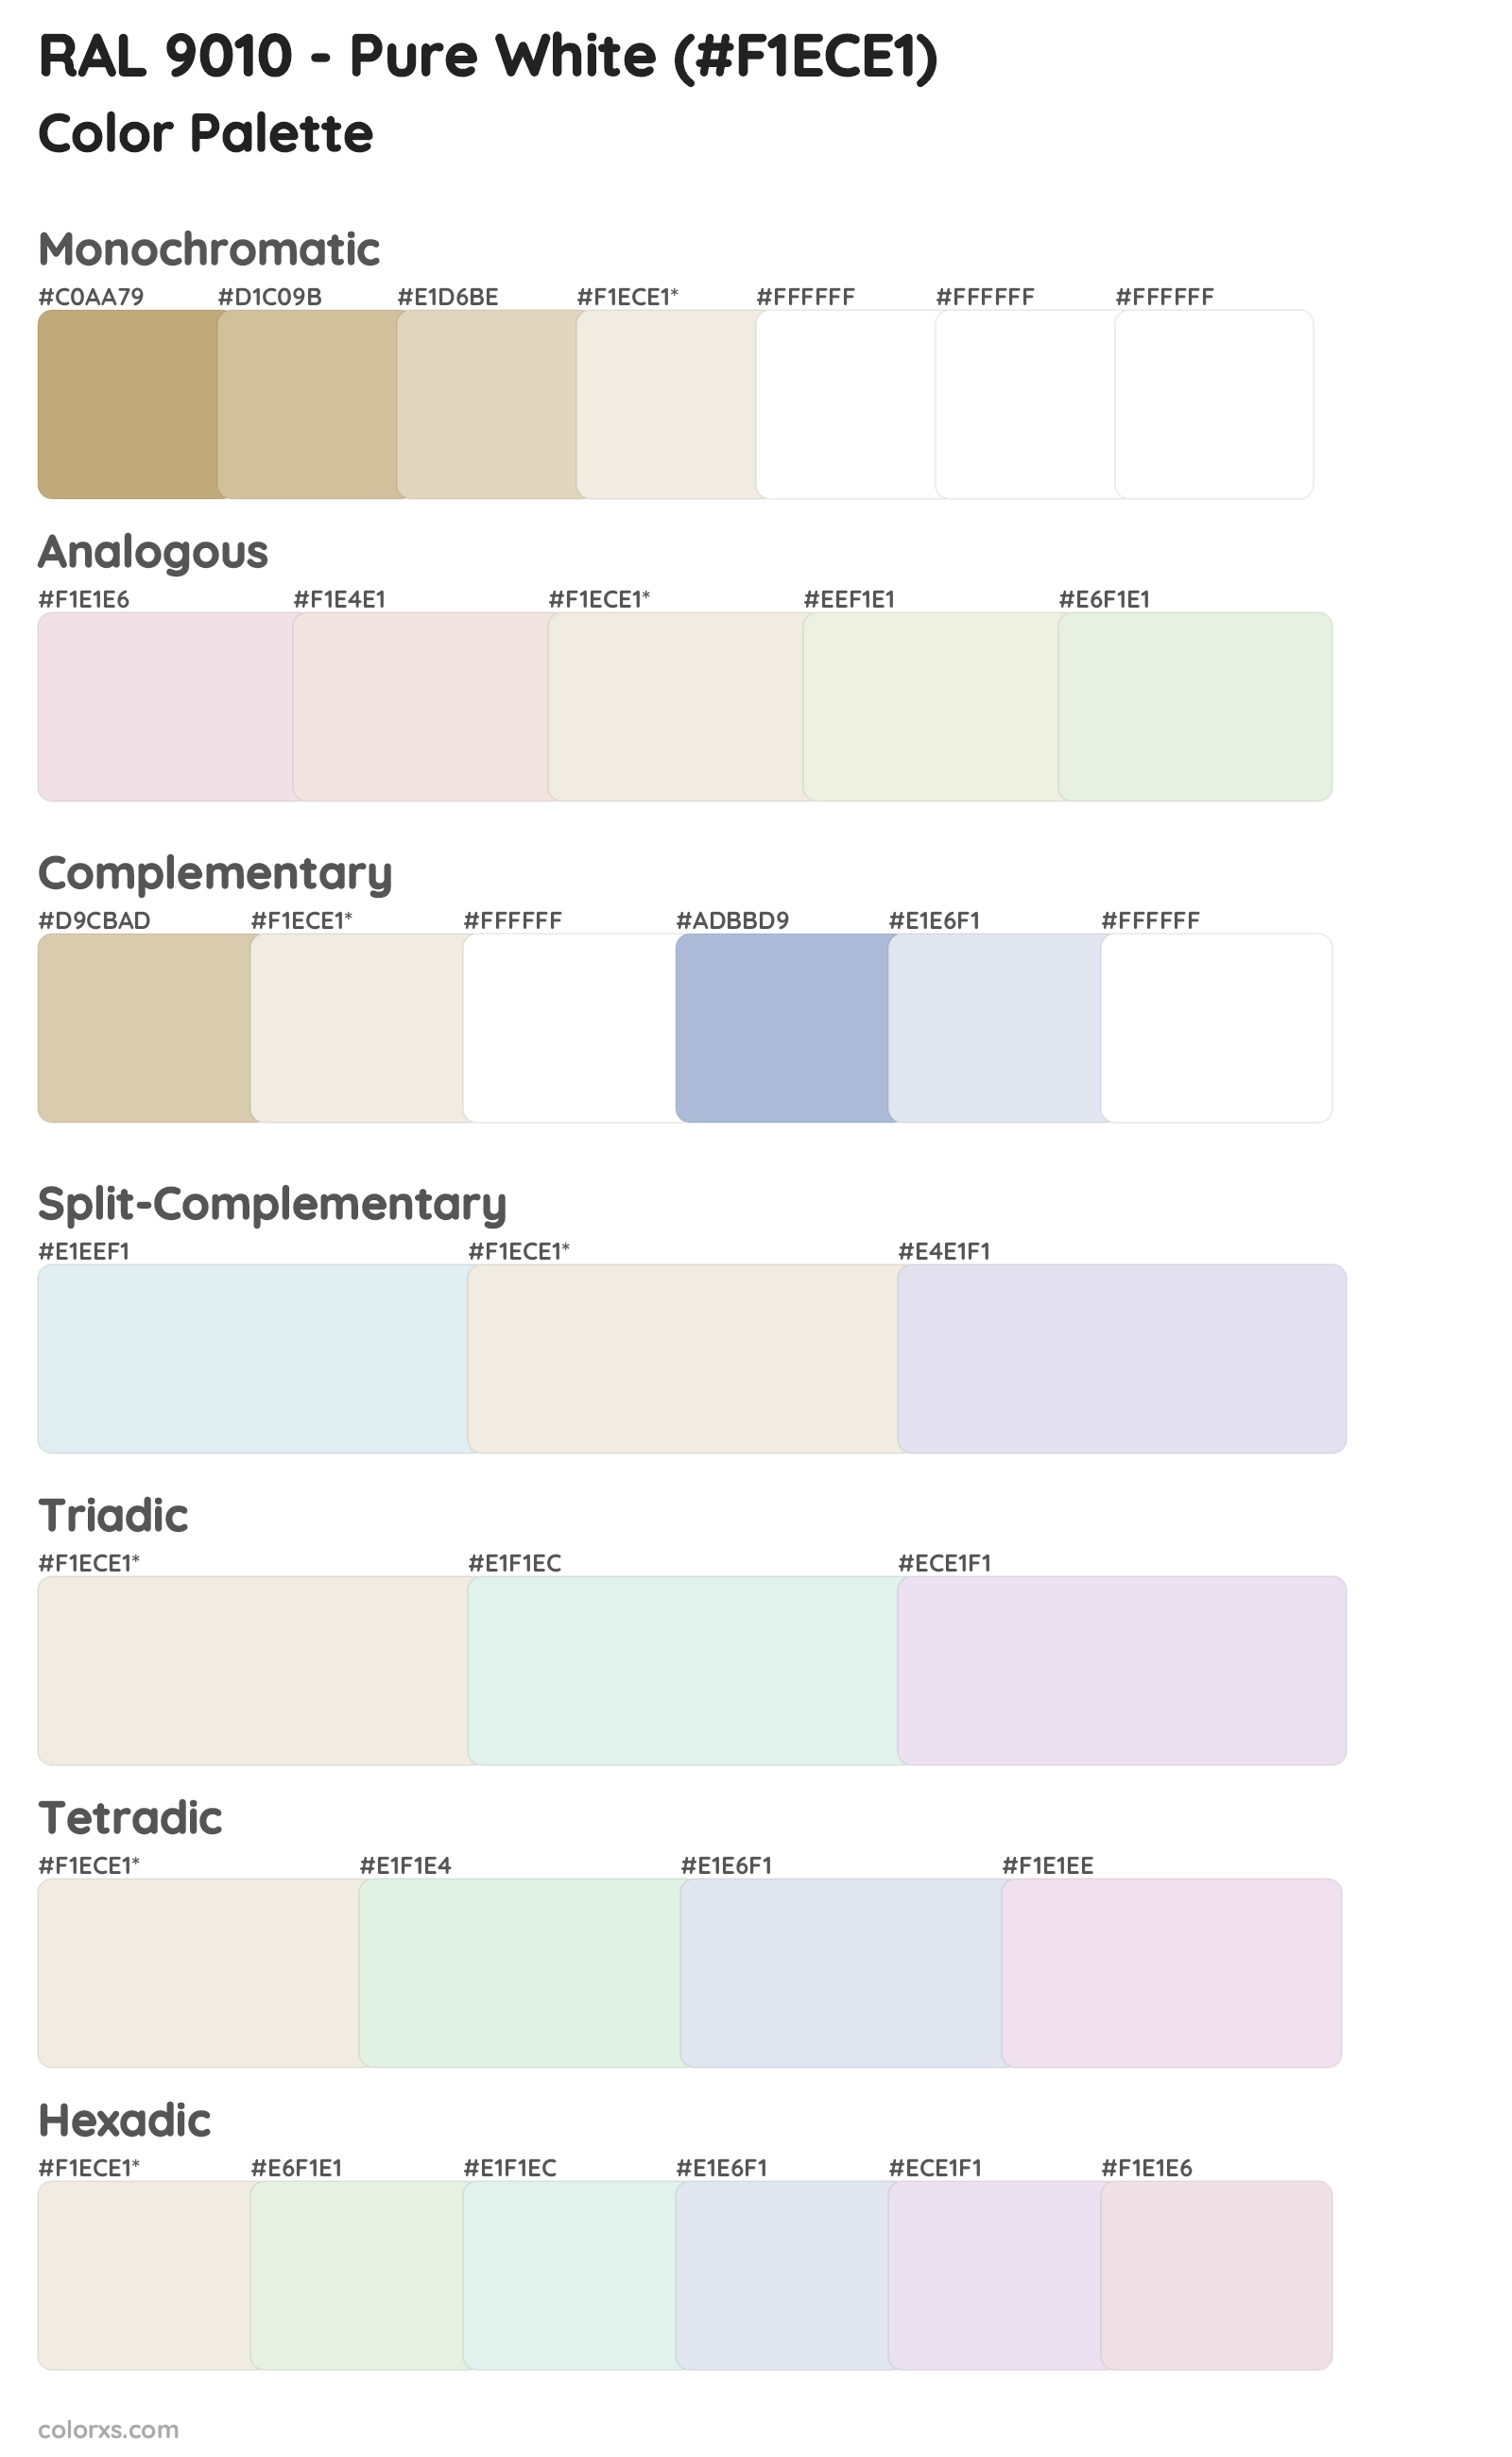 RAL 9010 - Pure White Color Scheme Palettes